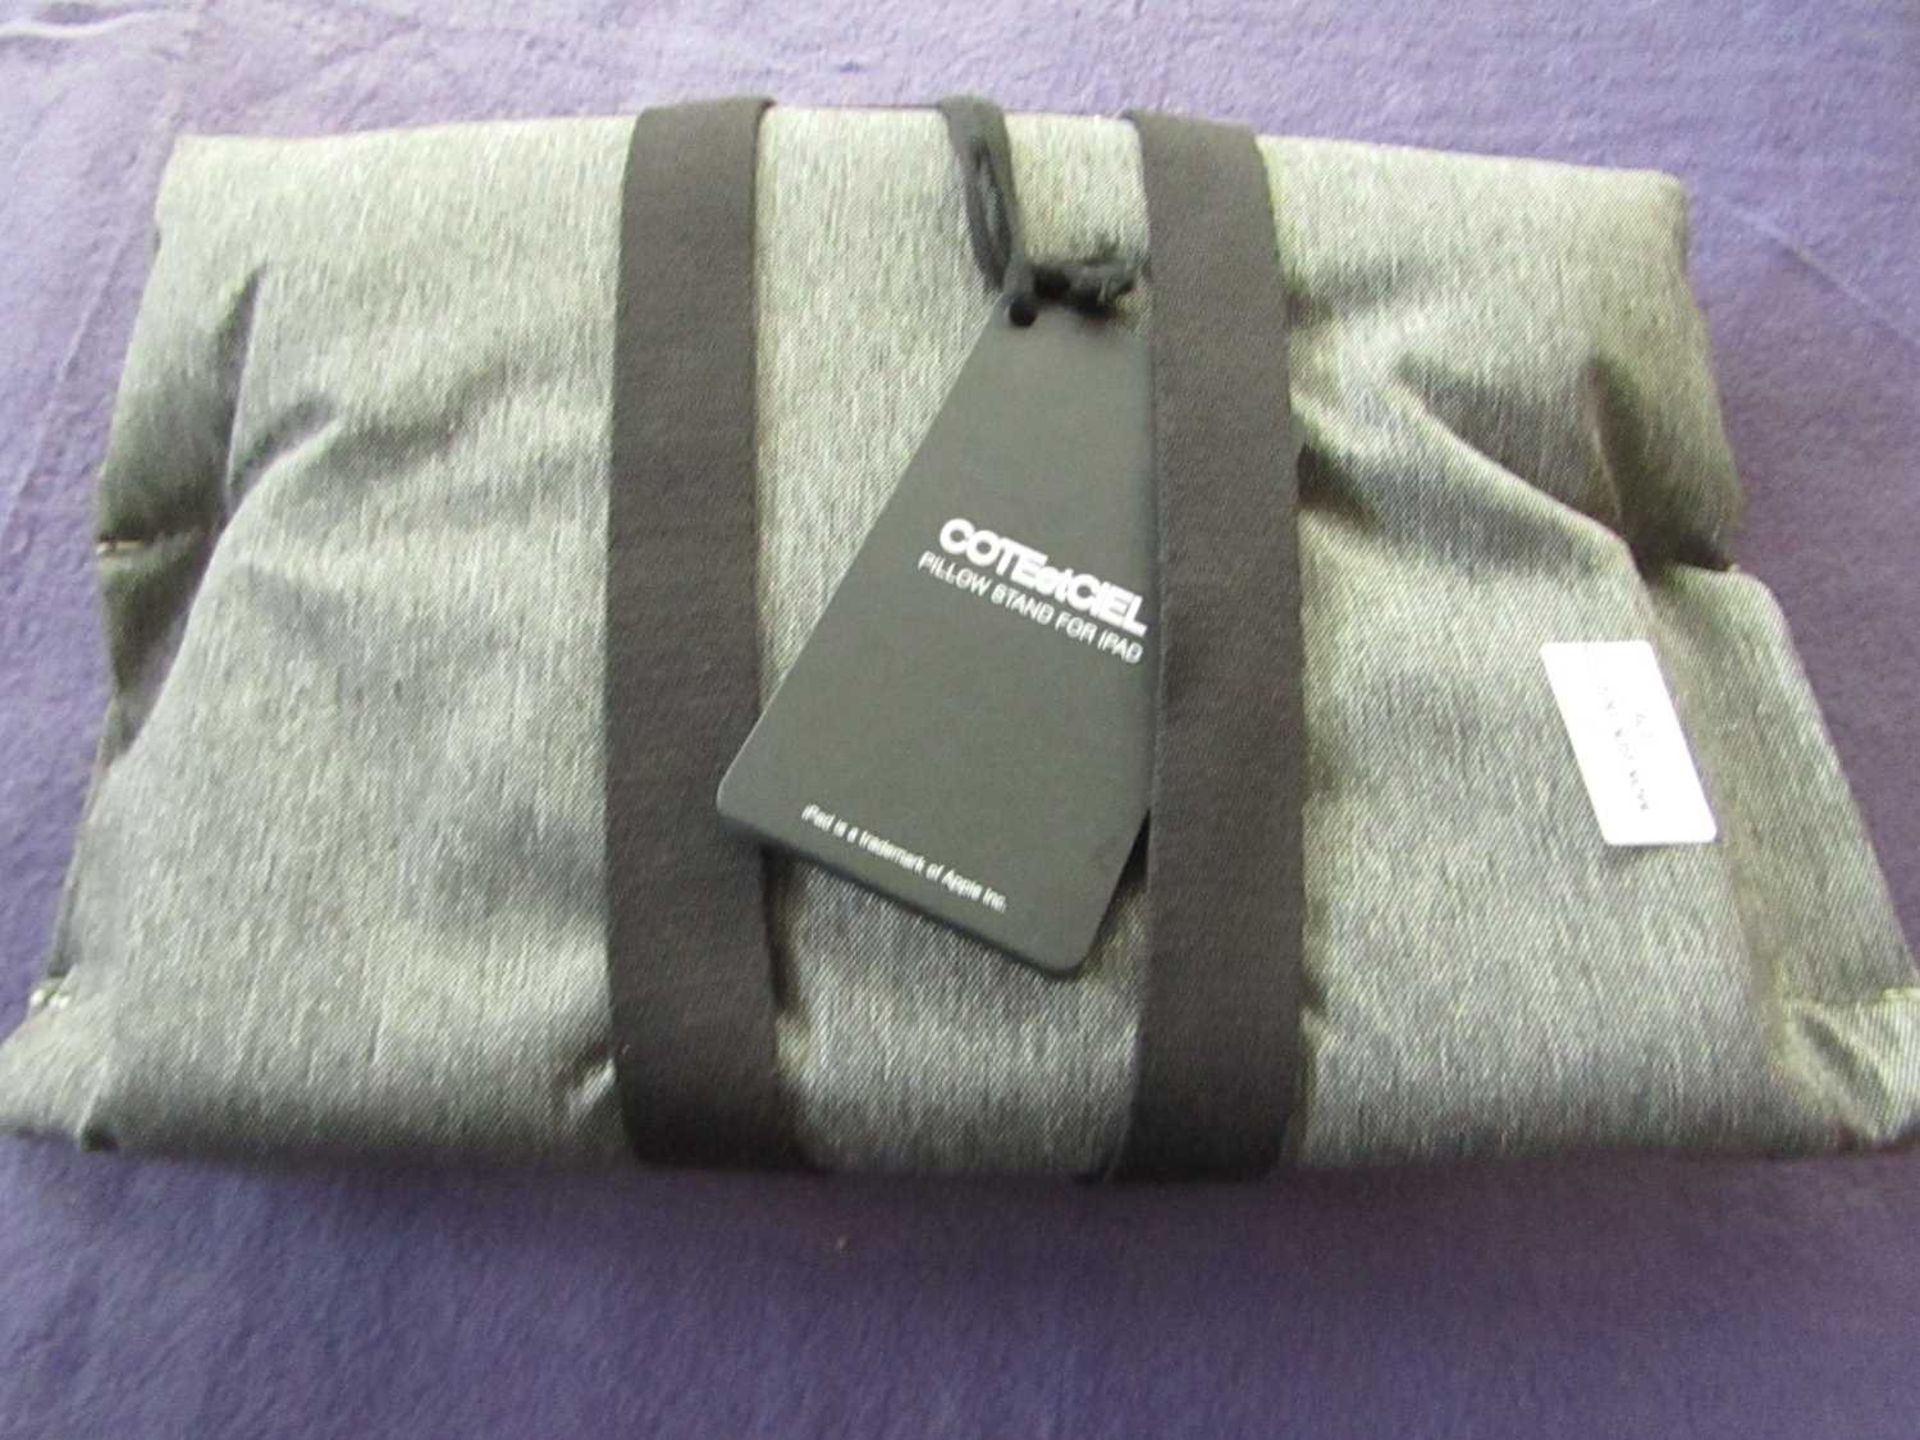 VAT 2x COTEetciel - Black Melange Pillow Stand For Ipad - Unused & Packaged.